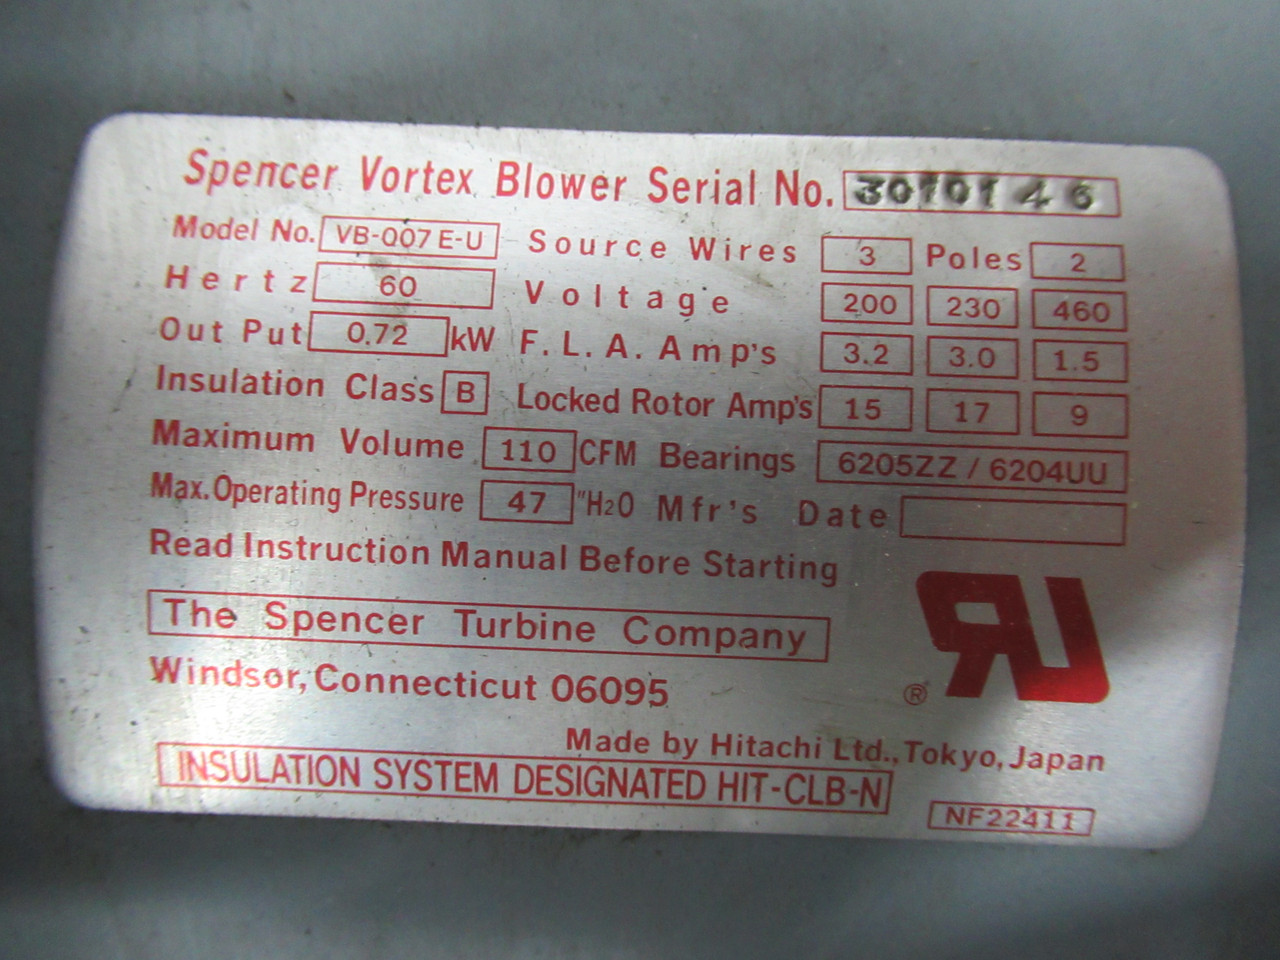 Spencer Vortex Blower 0.72kW 200/230/460V 3.2/3.0/1.5FLA 110CFM 60Hz USED